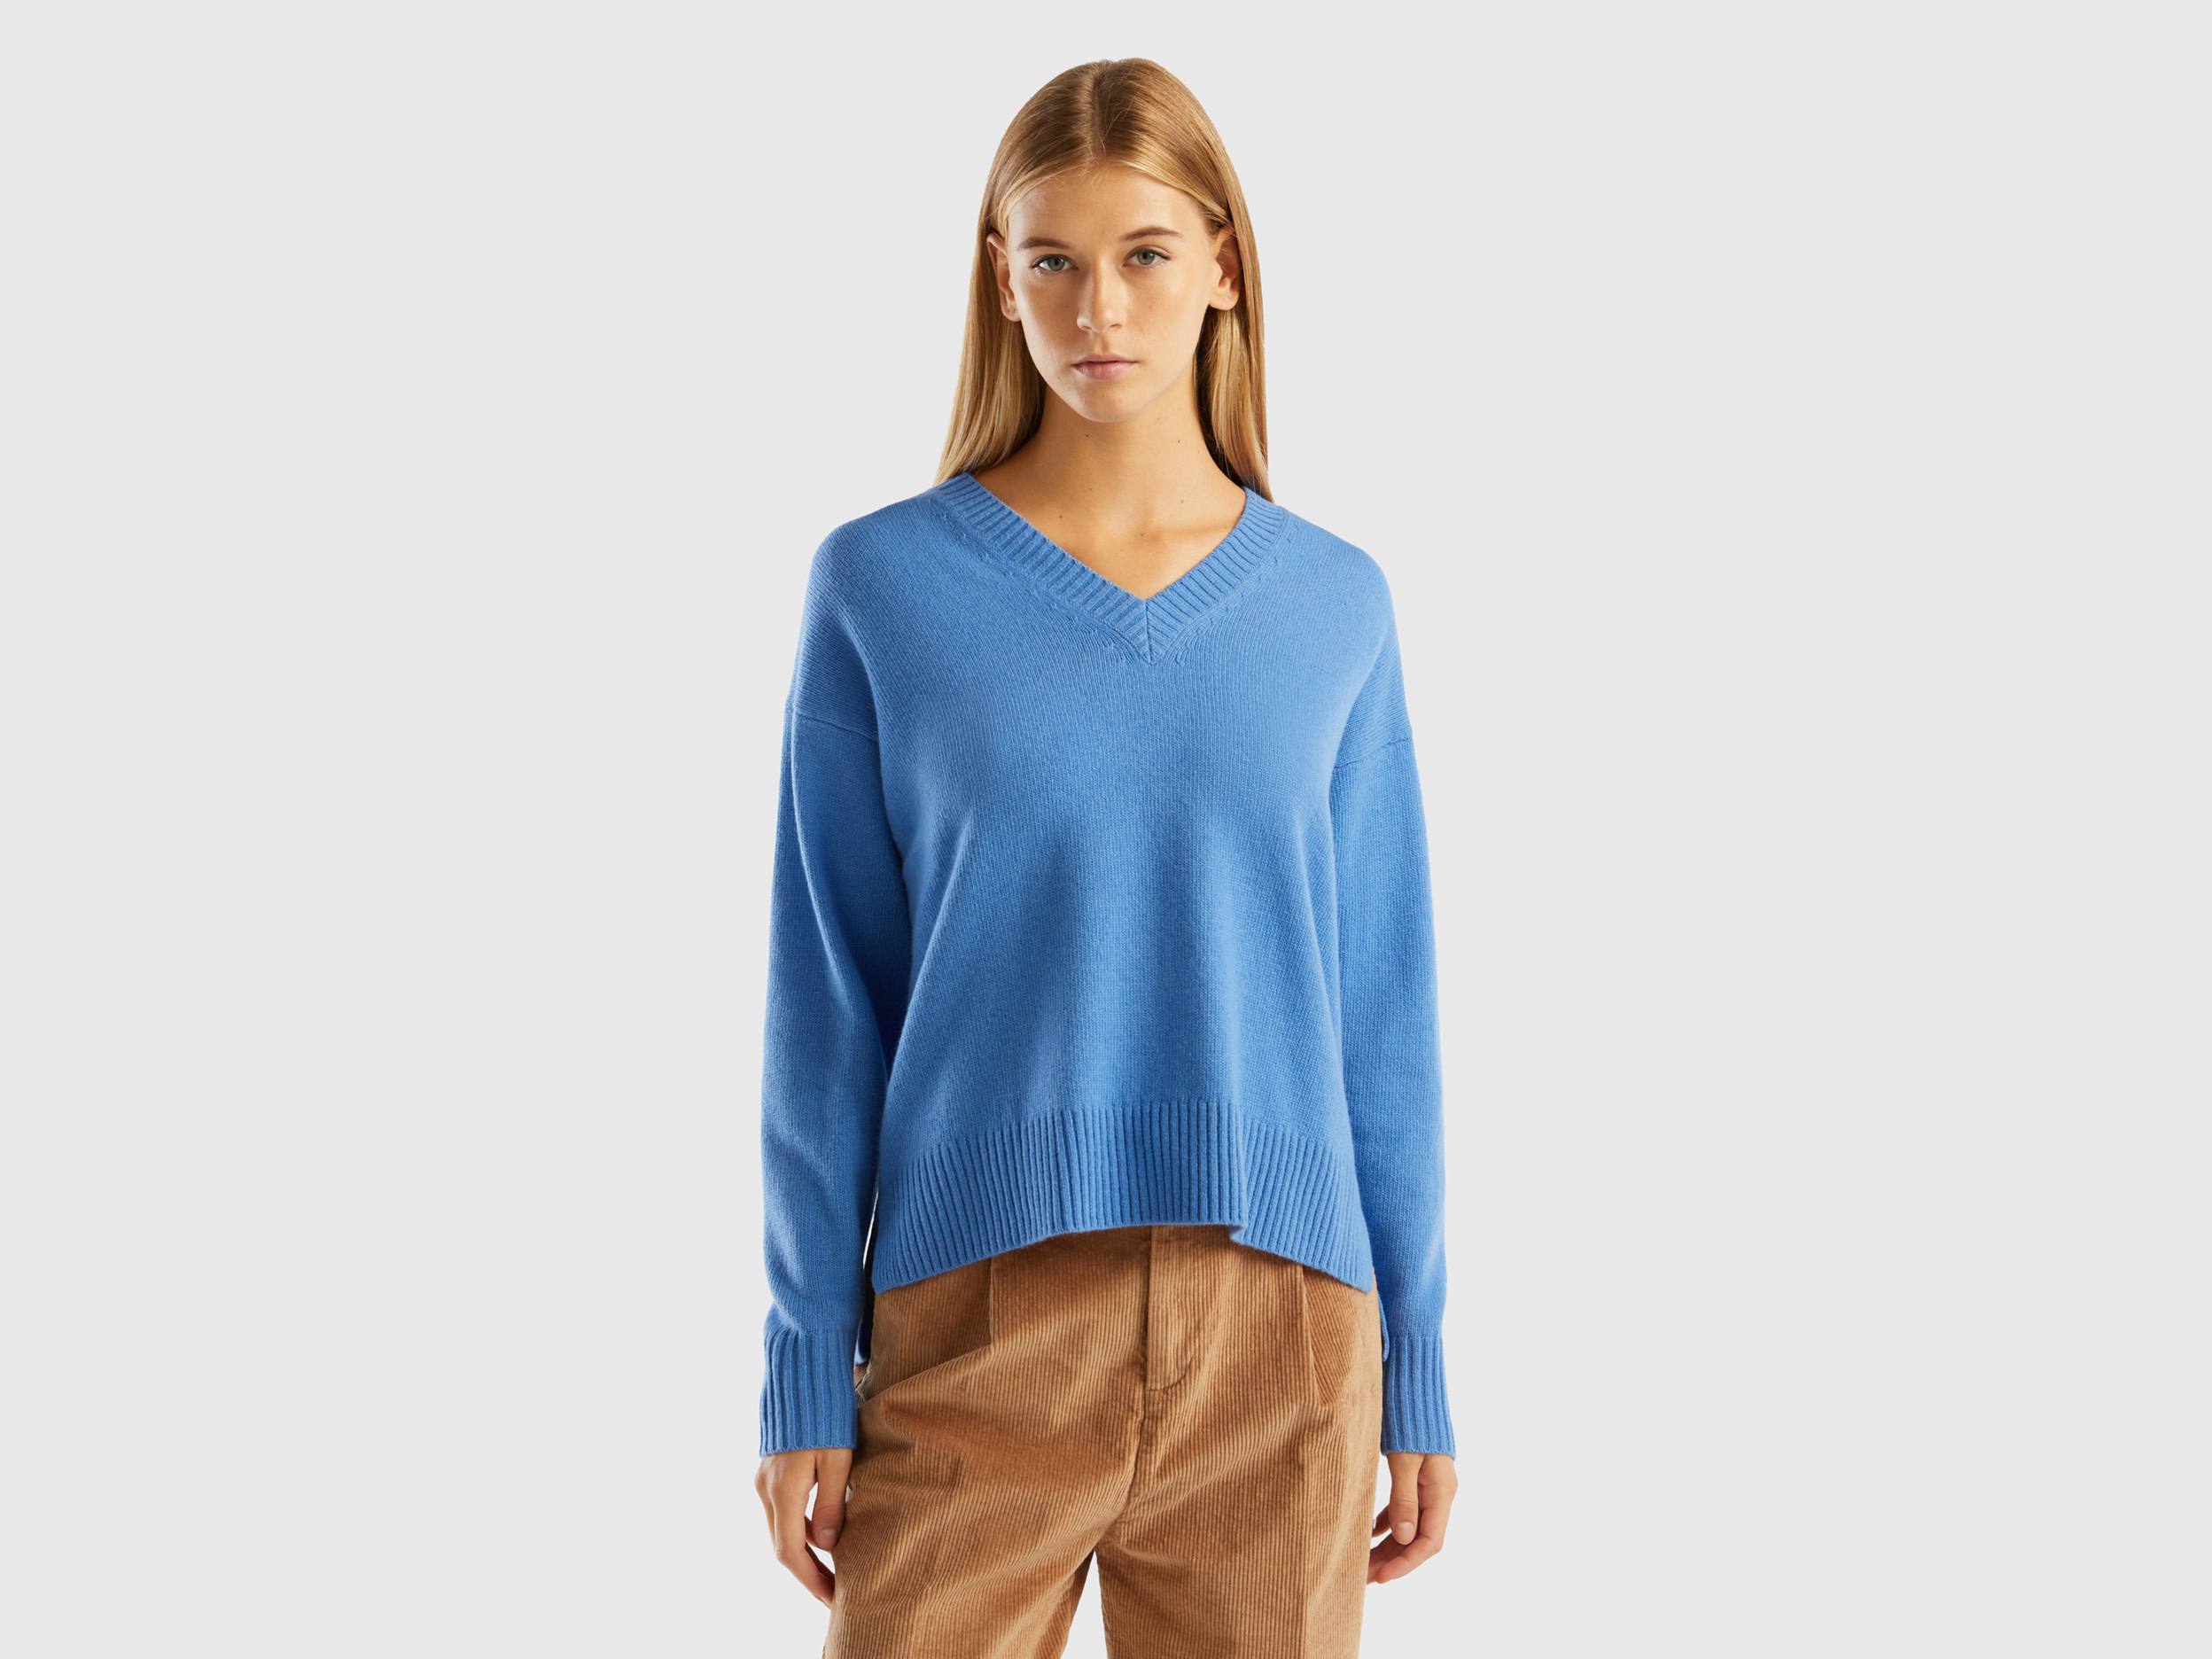 Benetton, Oversized Fit Sweater With Slits, size L-XL, Light Blue, Women